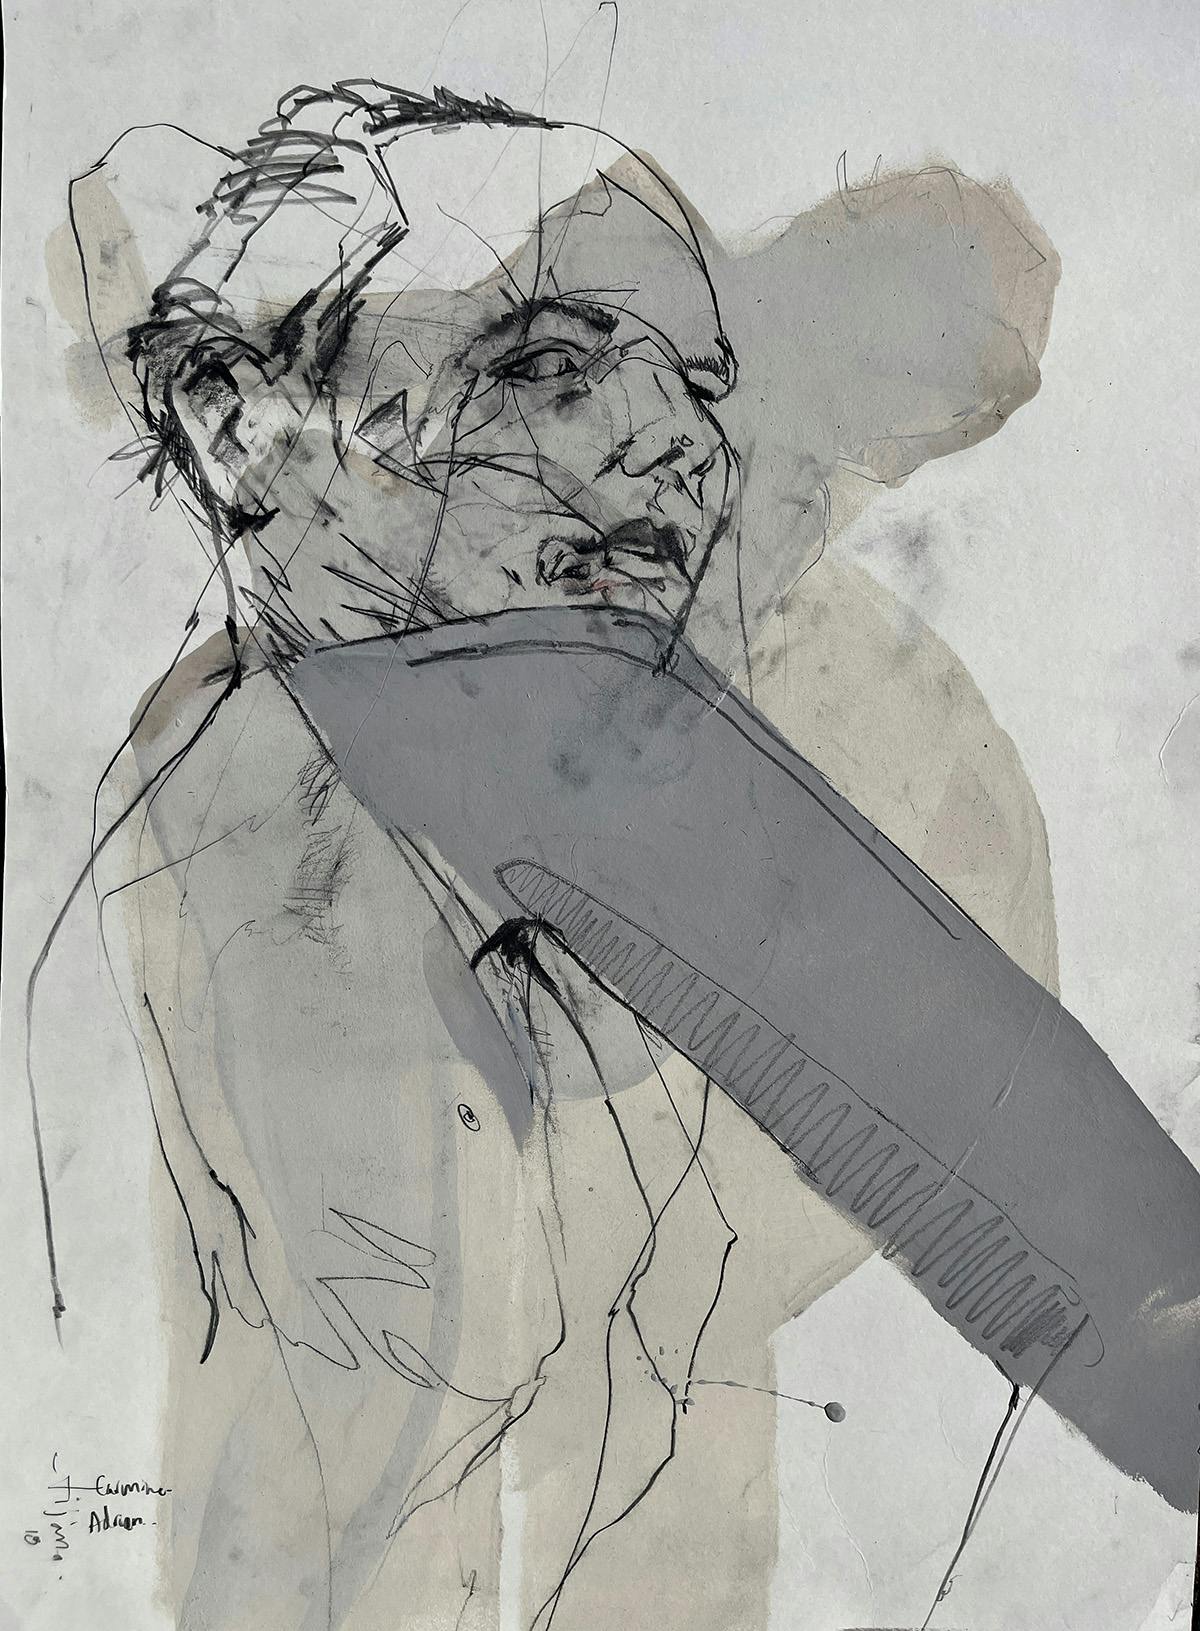 Nic Plowman, Life Drawing TijanaCarmineAdrian, 2020, graphite and acrylic on paper, 70.0 x 50.0